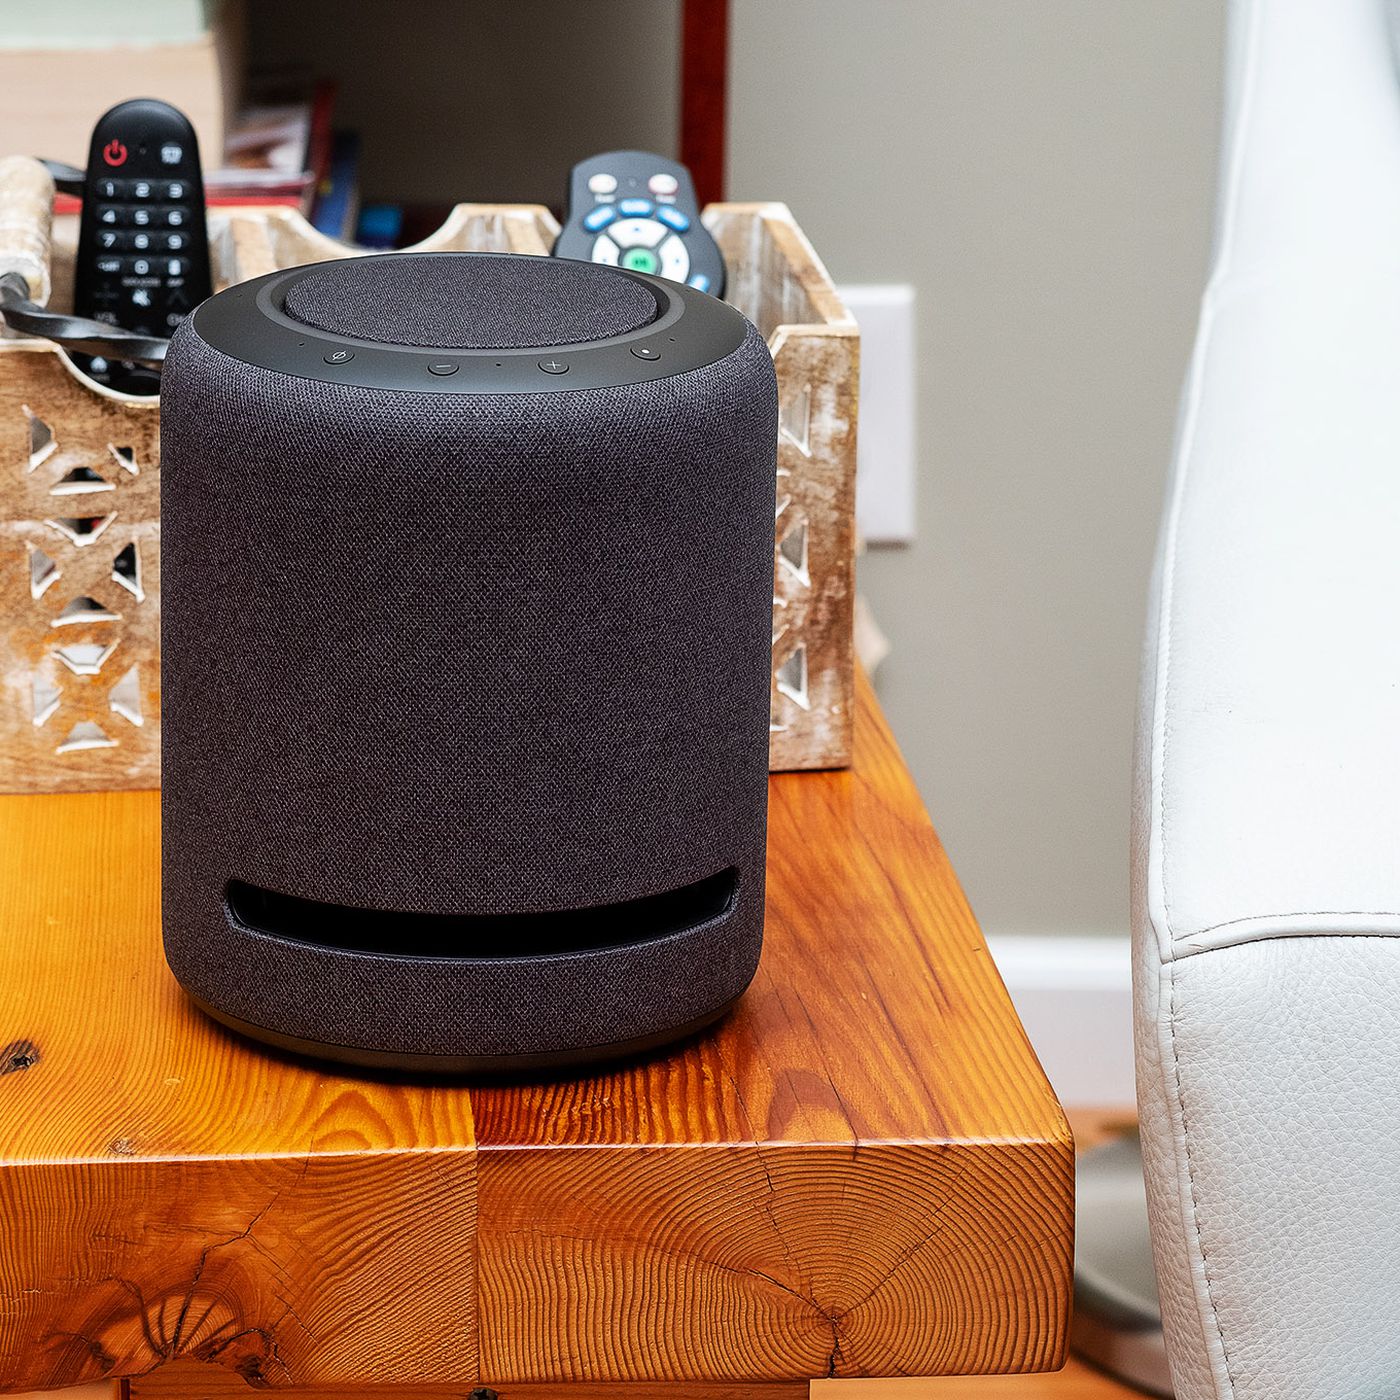 Amazon Echo Studio review: finally, an Echo that sounds great